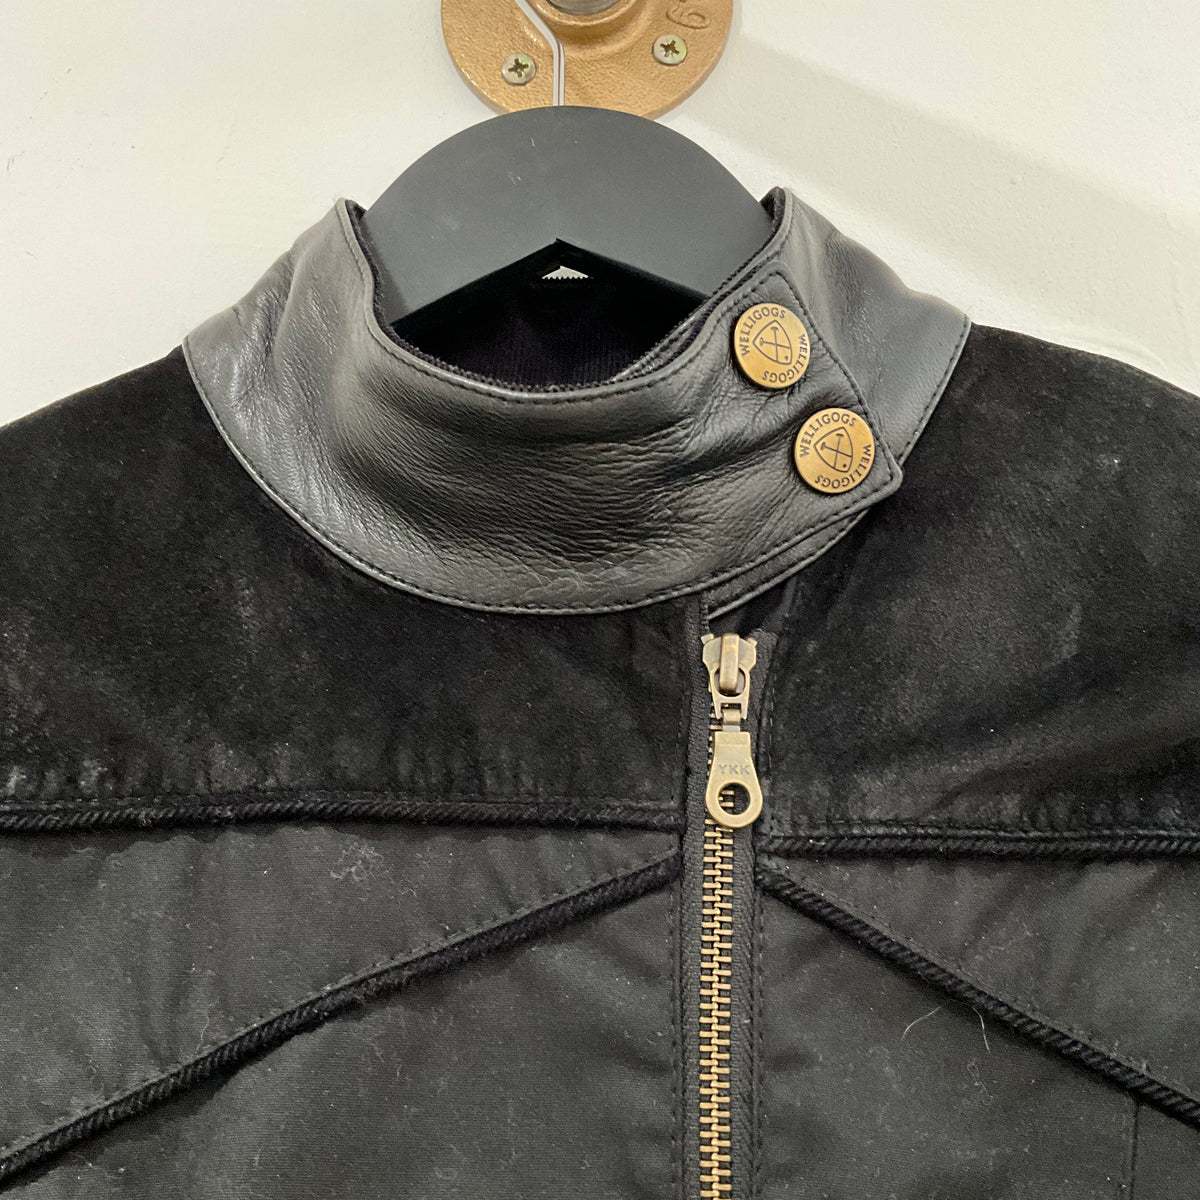 Wellygogs 'Roxy' jacket Black Size 8